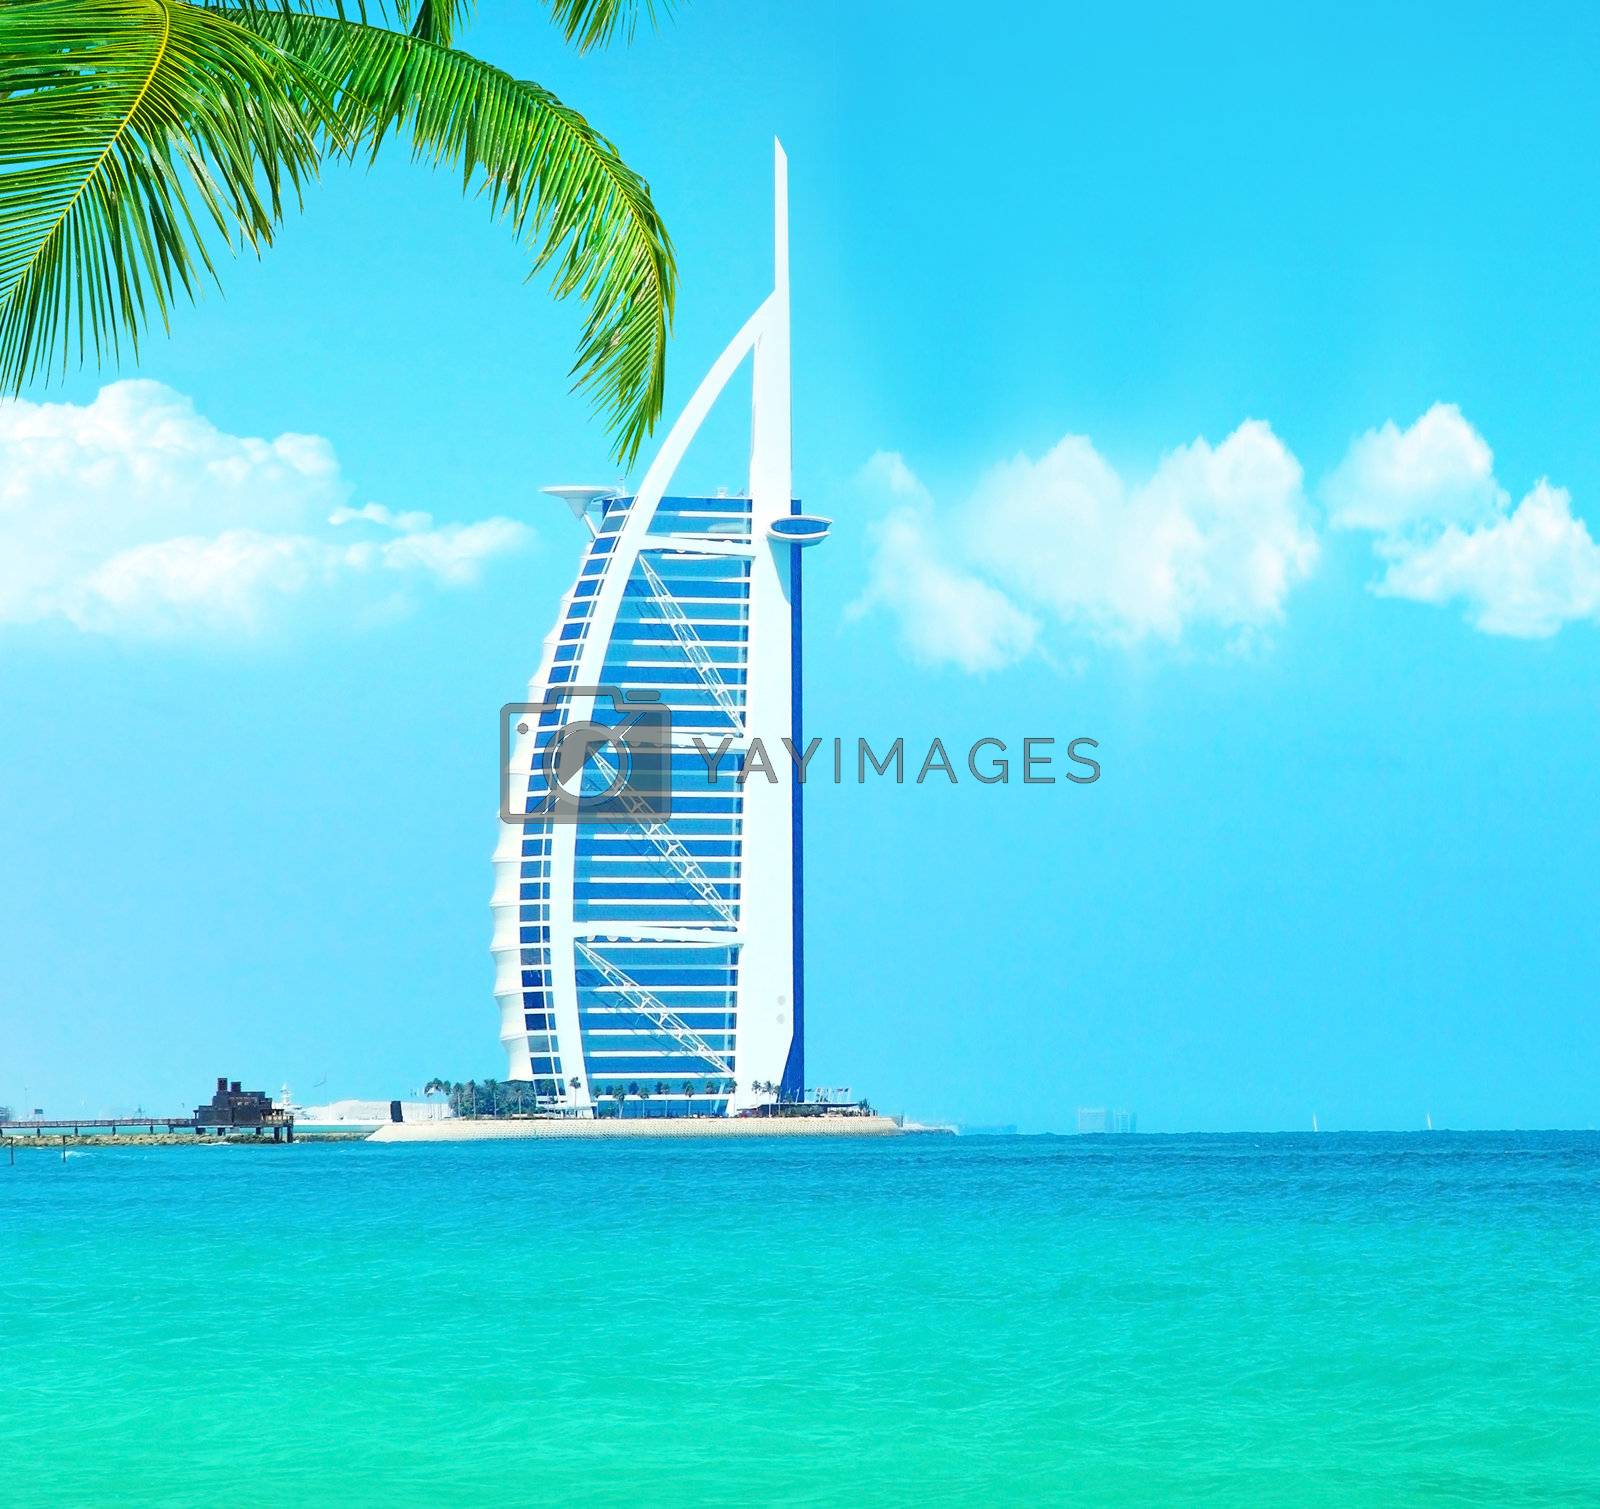 Royalty free image of Burj Al Arab hotel on Jumeirah beach in Dubai by Anna_Omelchenko